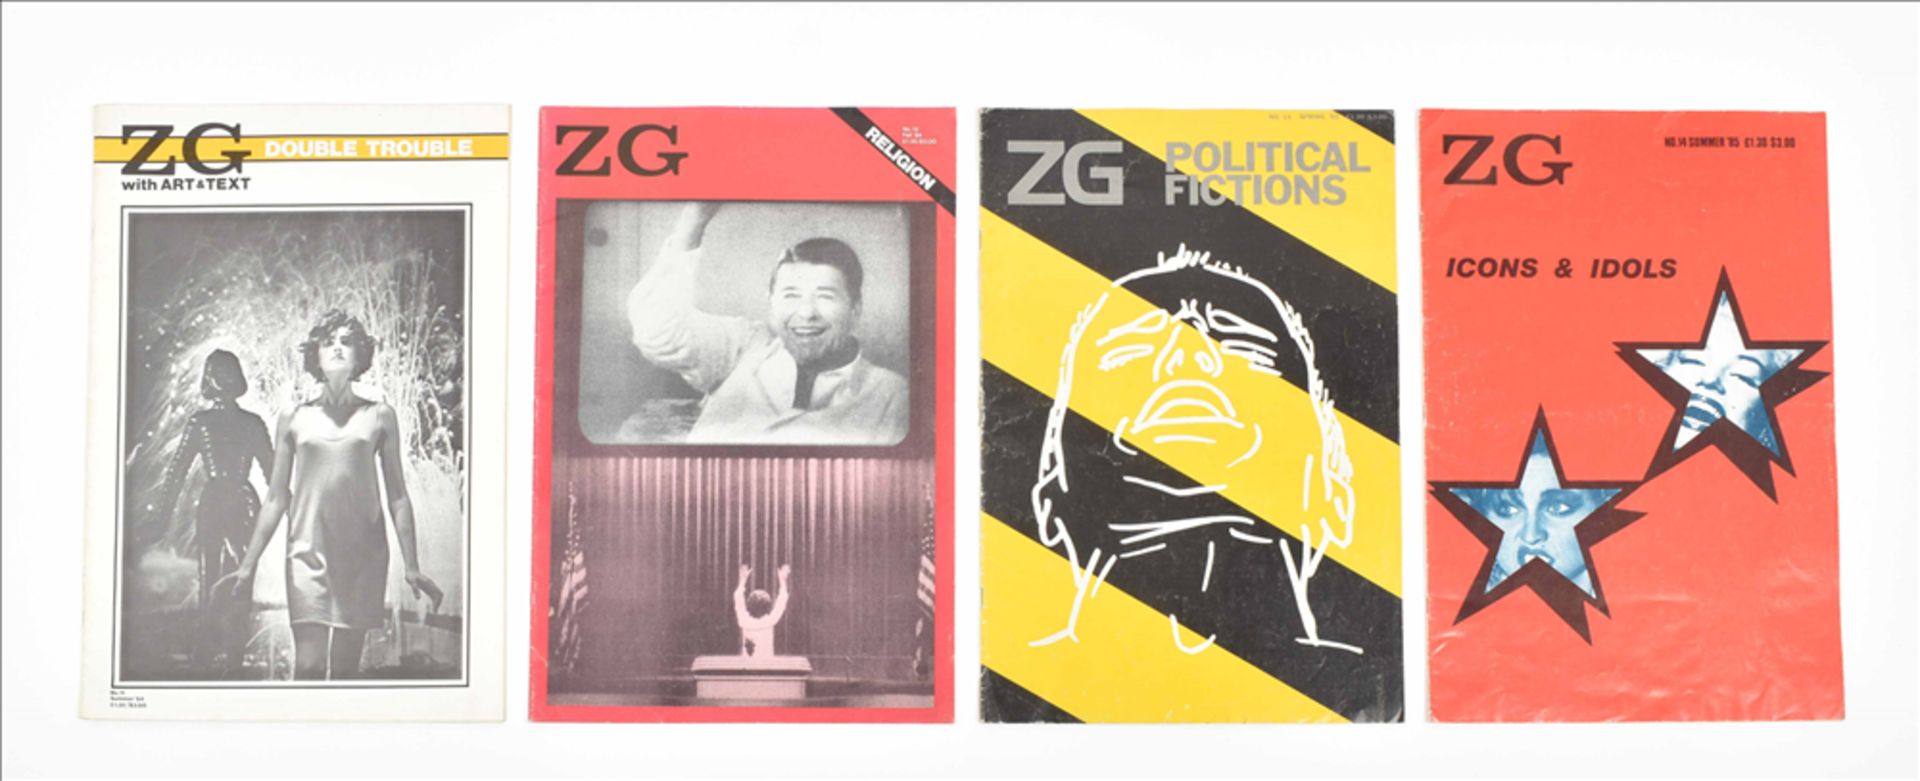 ZG magazine, set of 6 issues 1984-1988